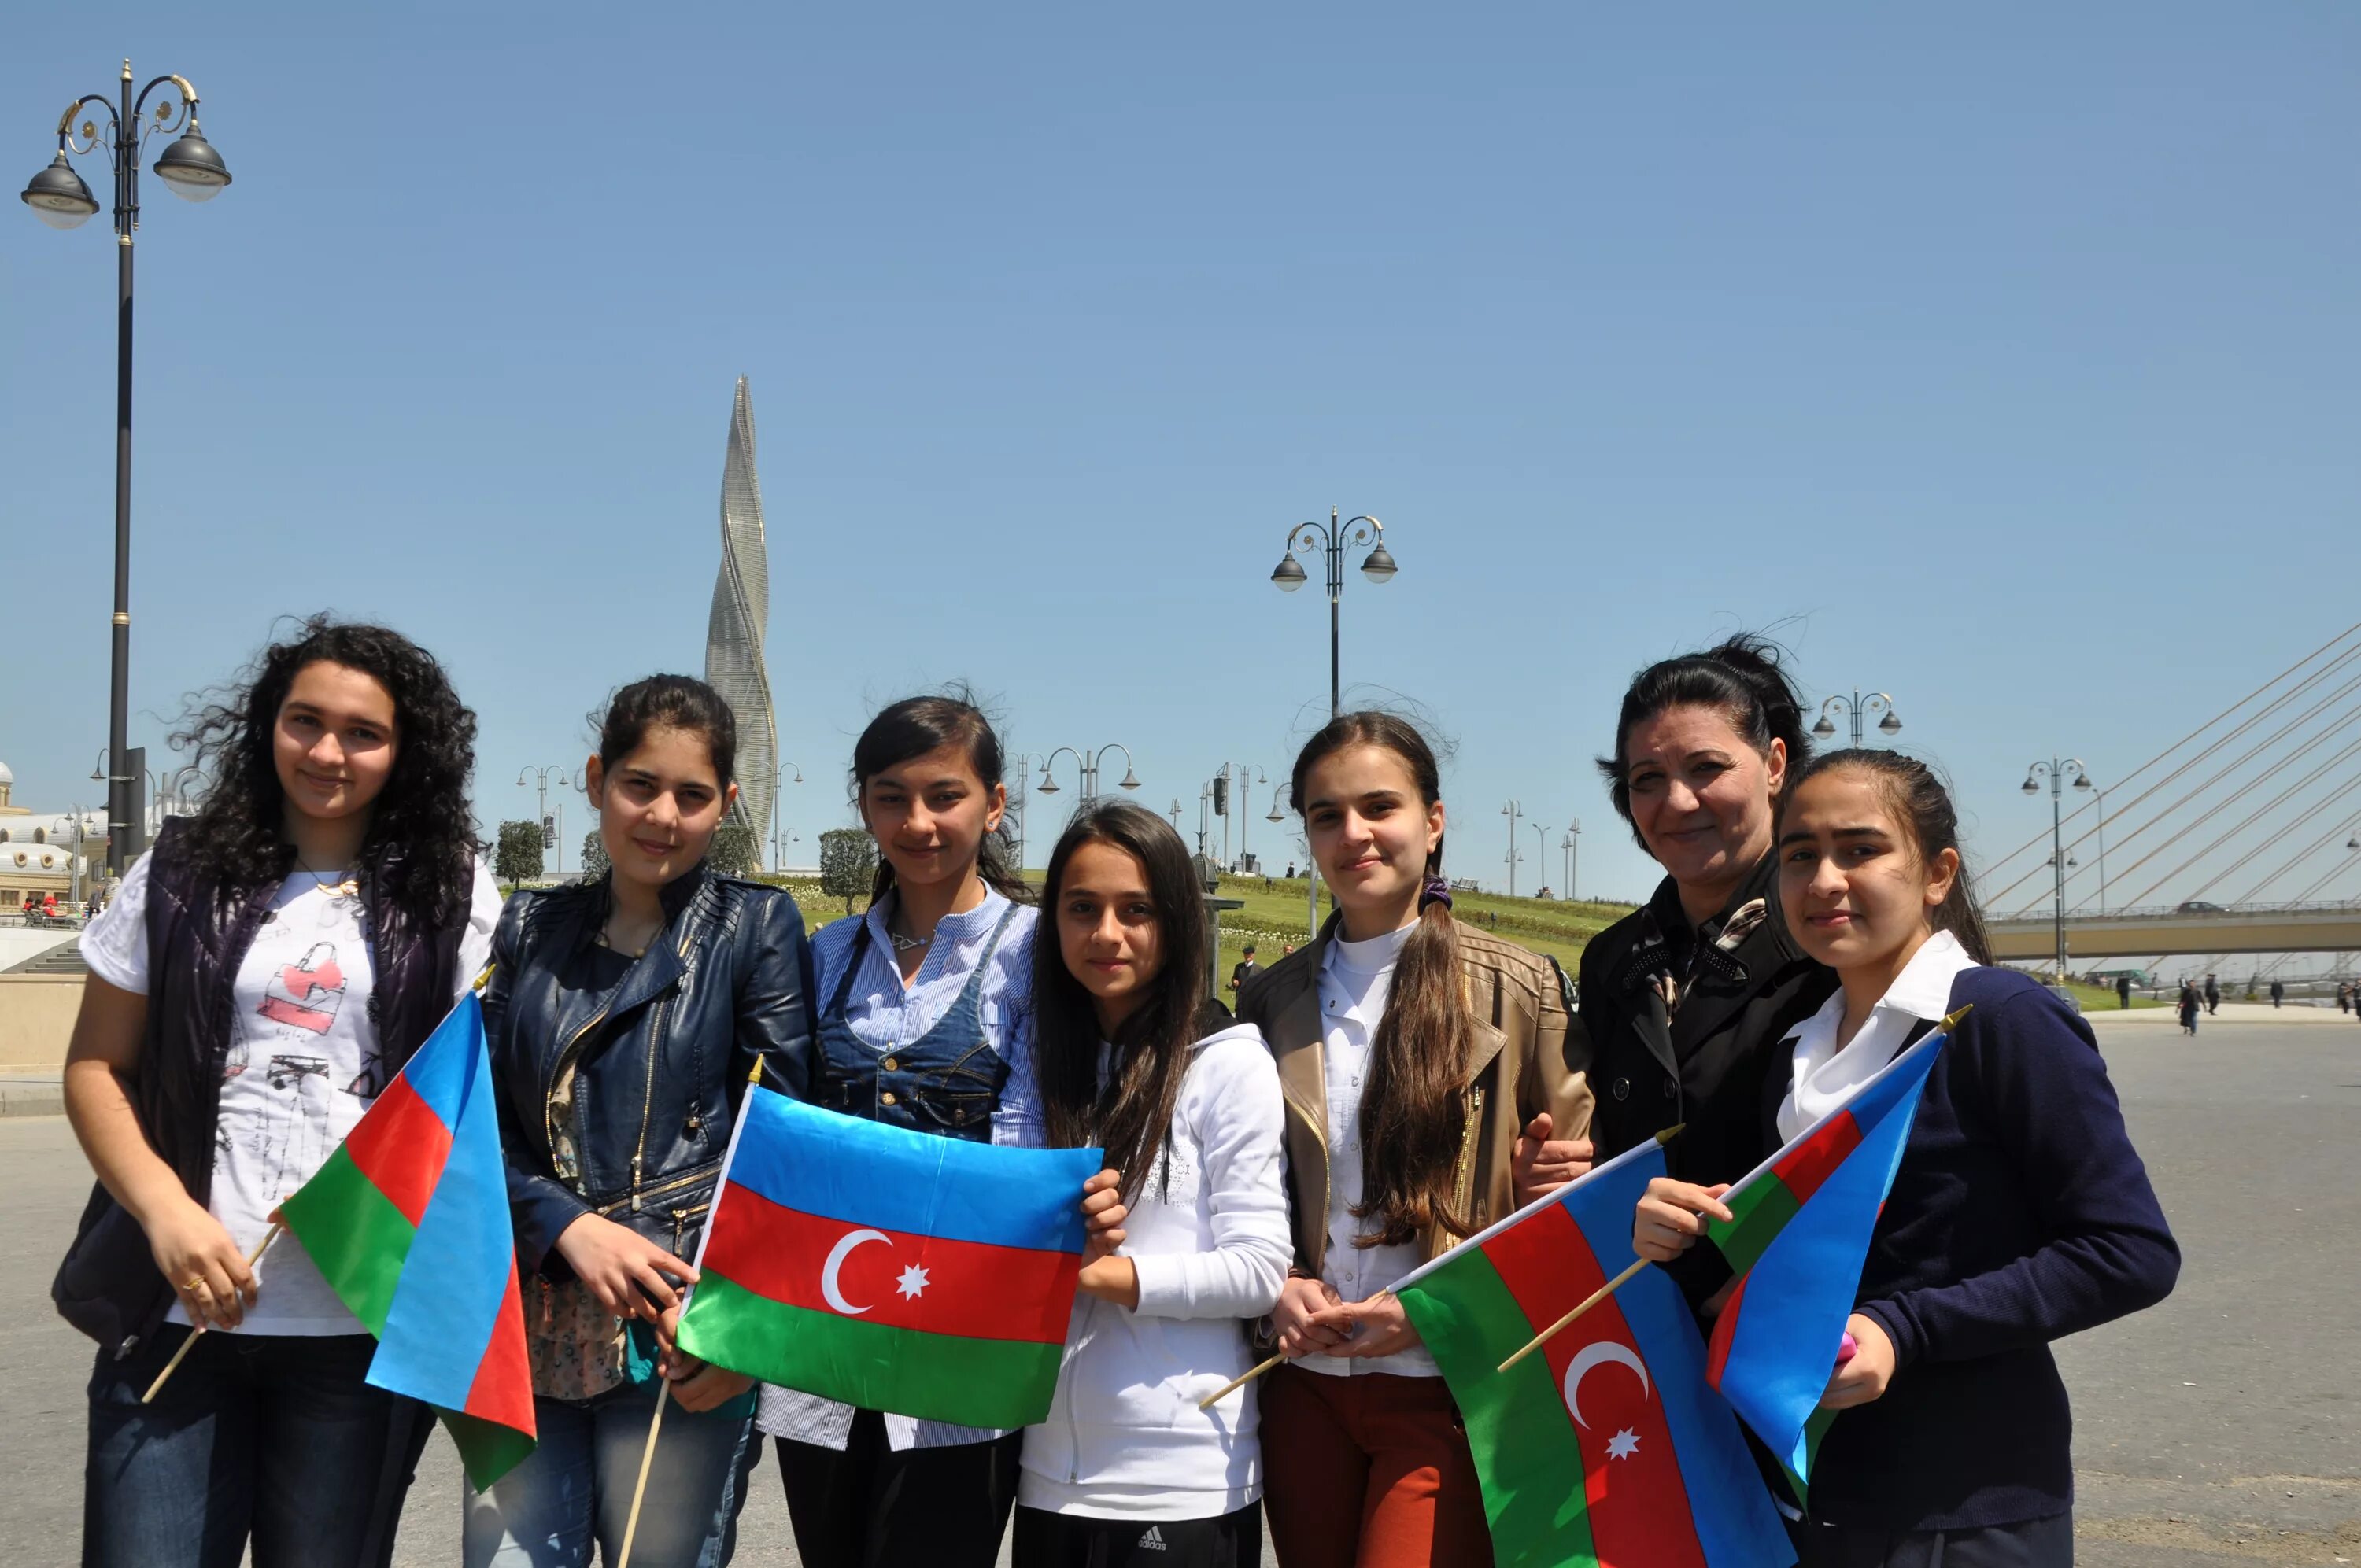 Азербайджан люди. Азербайджан народ. Жители Азербайджана. Азербайджанцы в Баку.